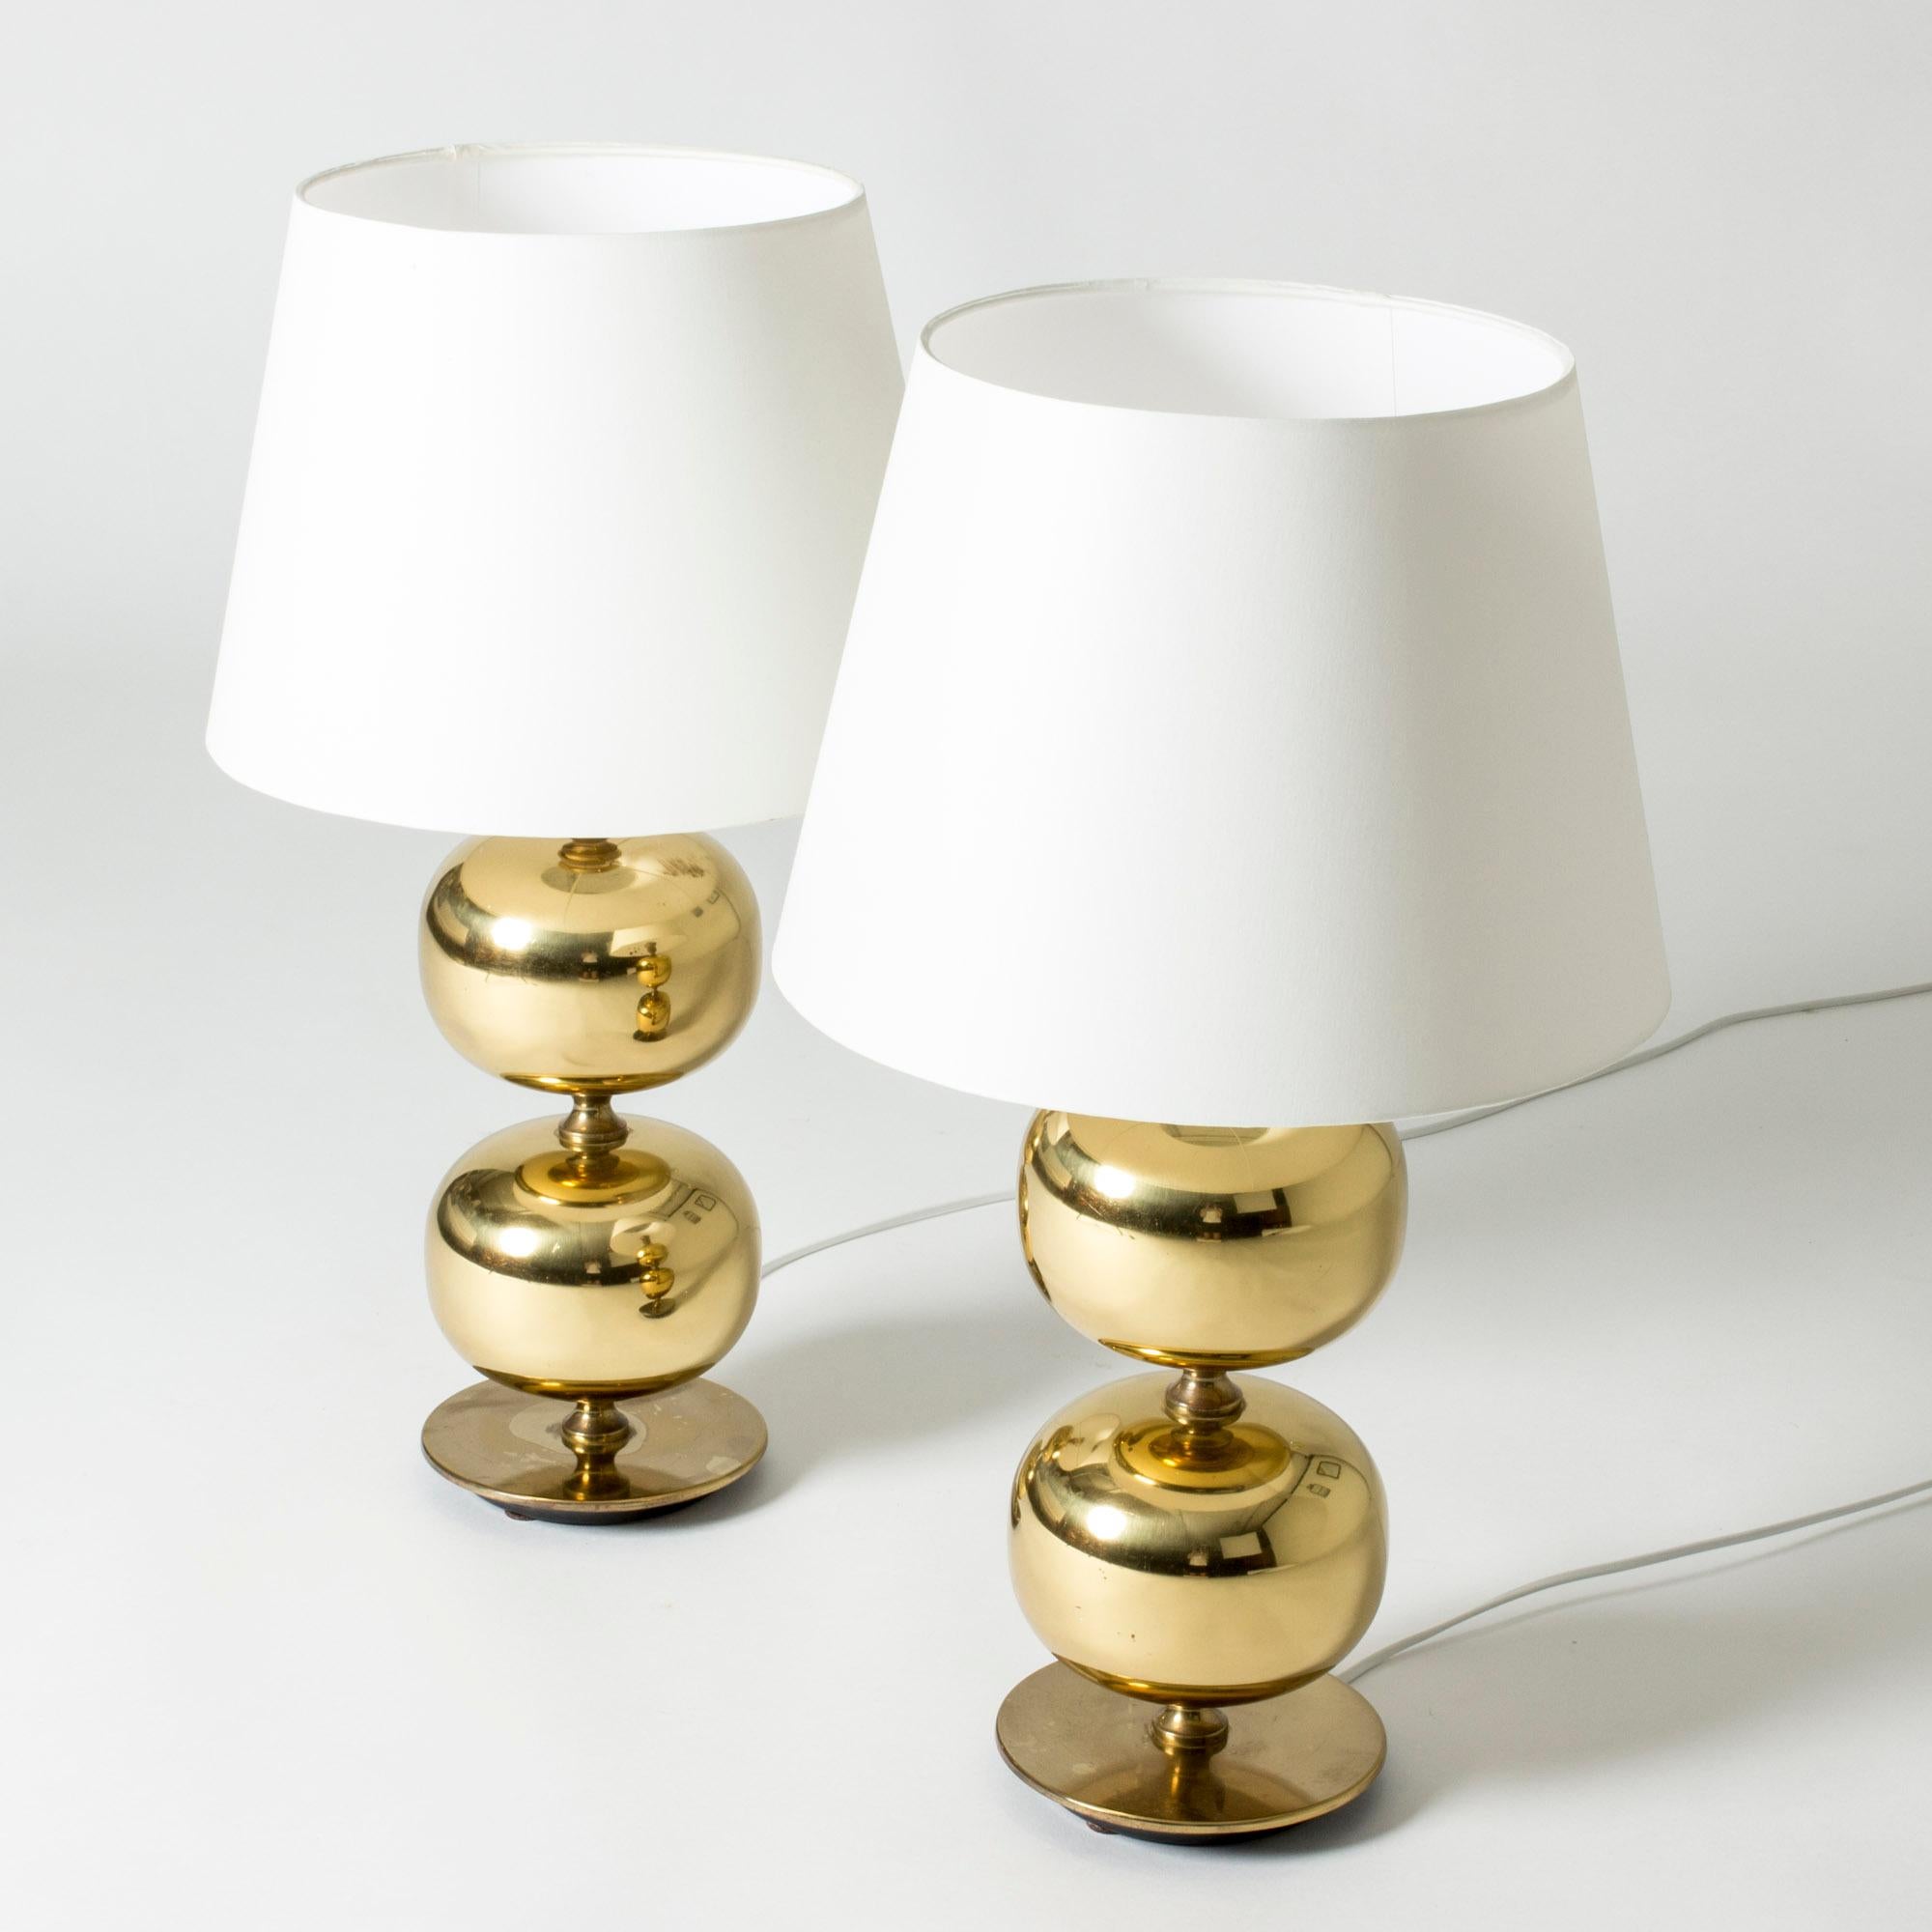 Scandinavian Modern Pair of Midcentury Brass Table Lamps by Henrik Blomqvist, Sweden, 1960s For Sale